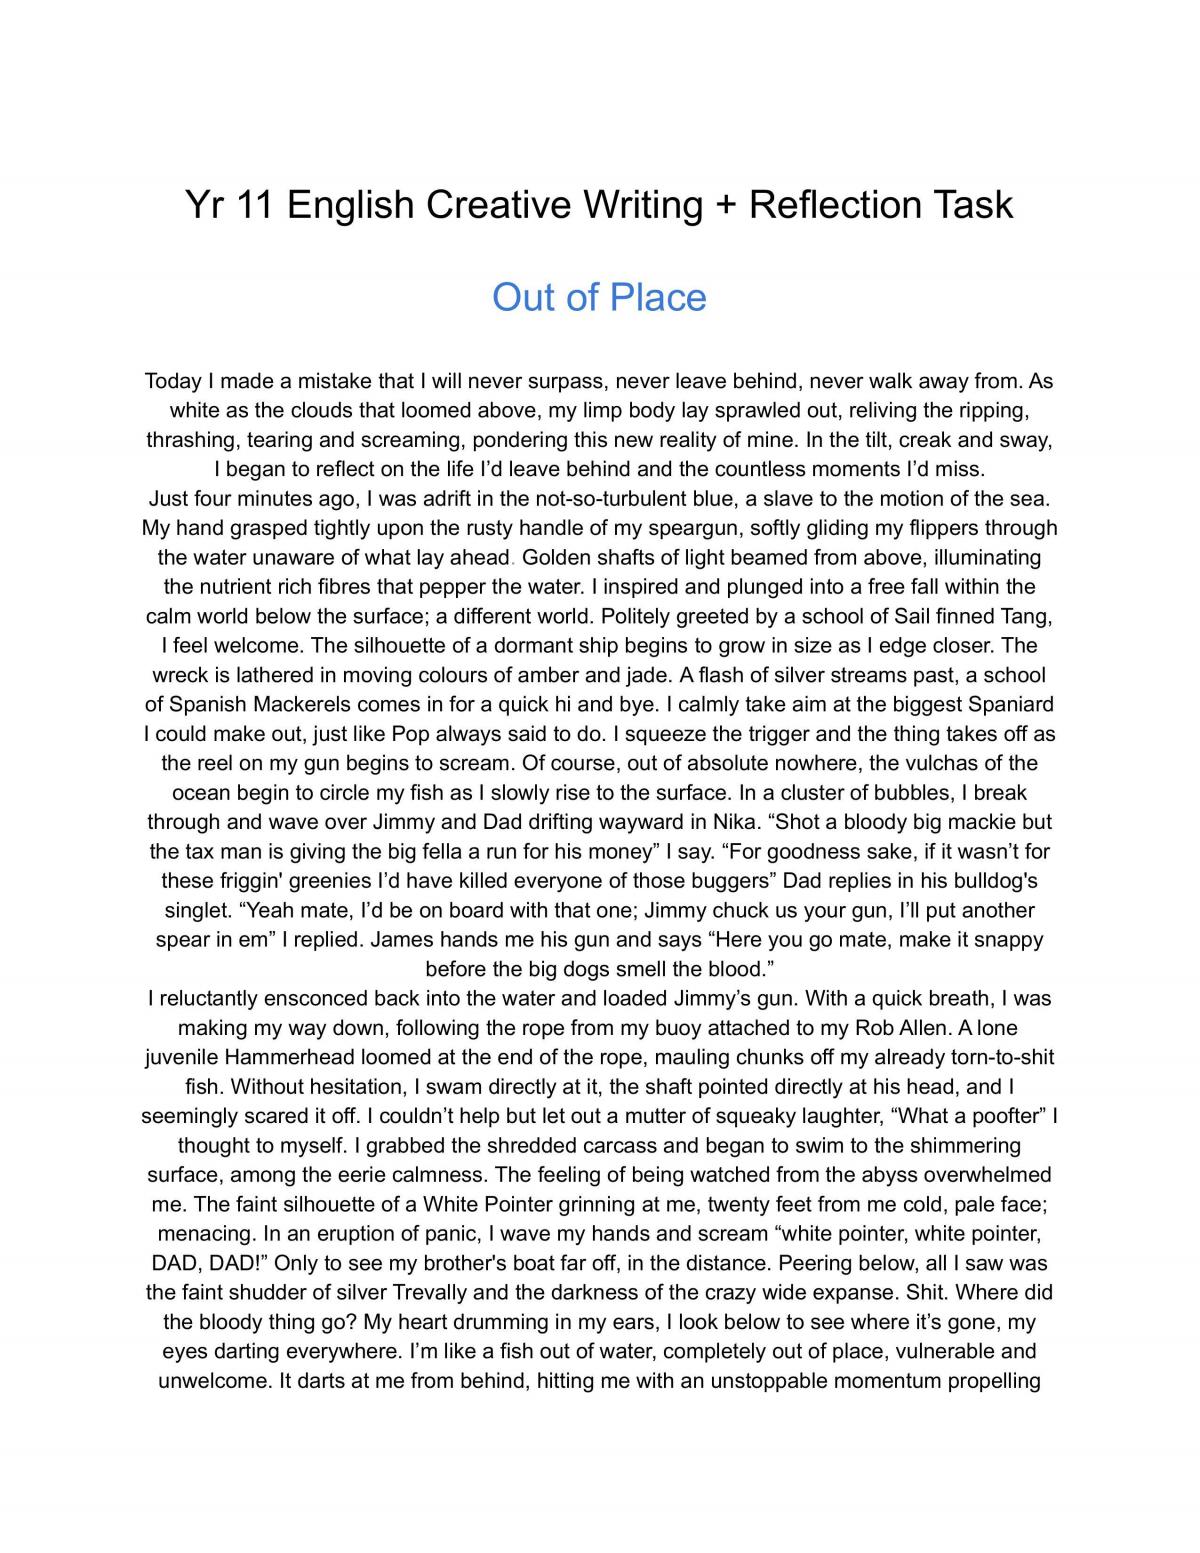 creative writing topics year 11